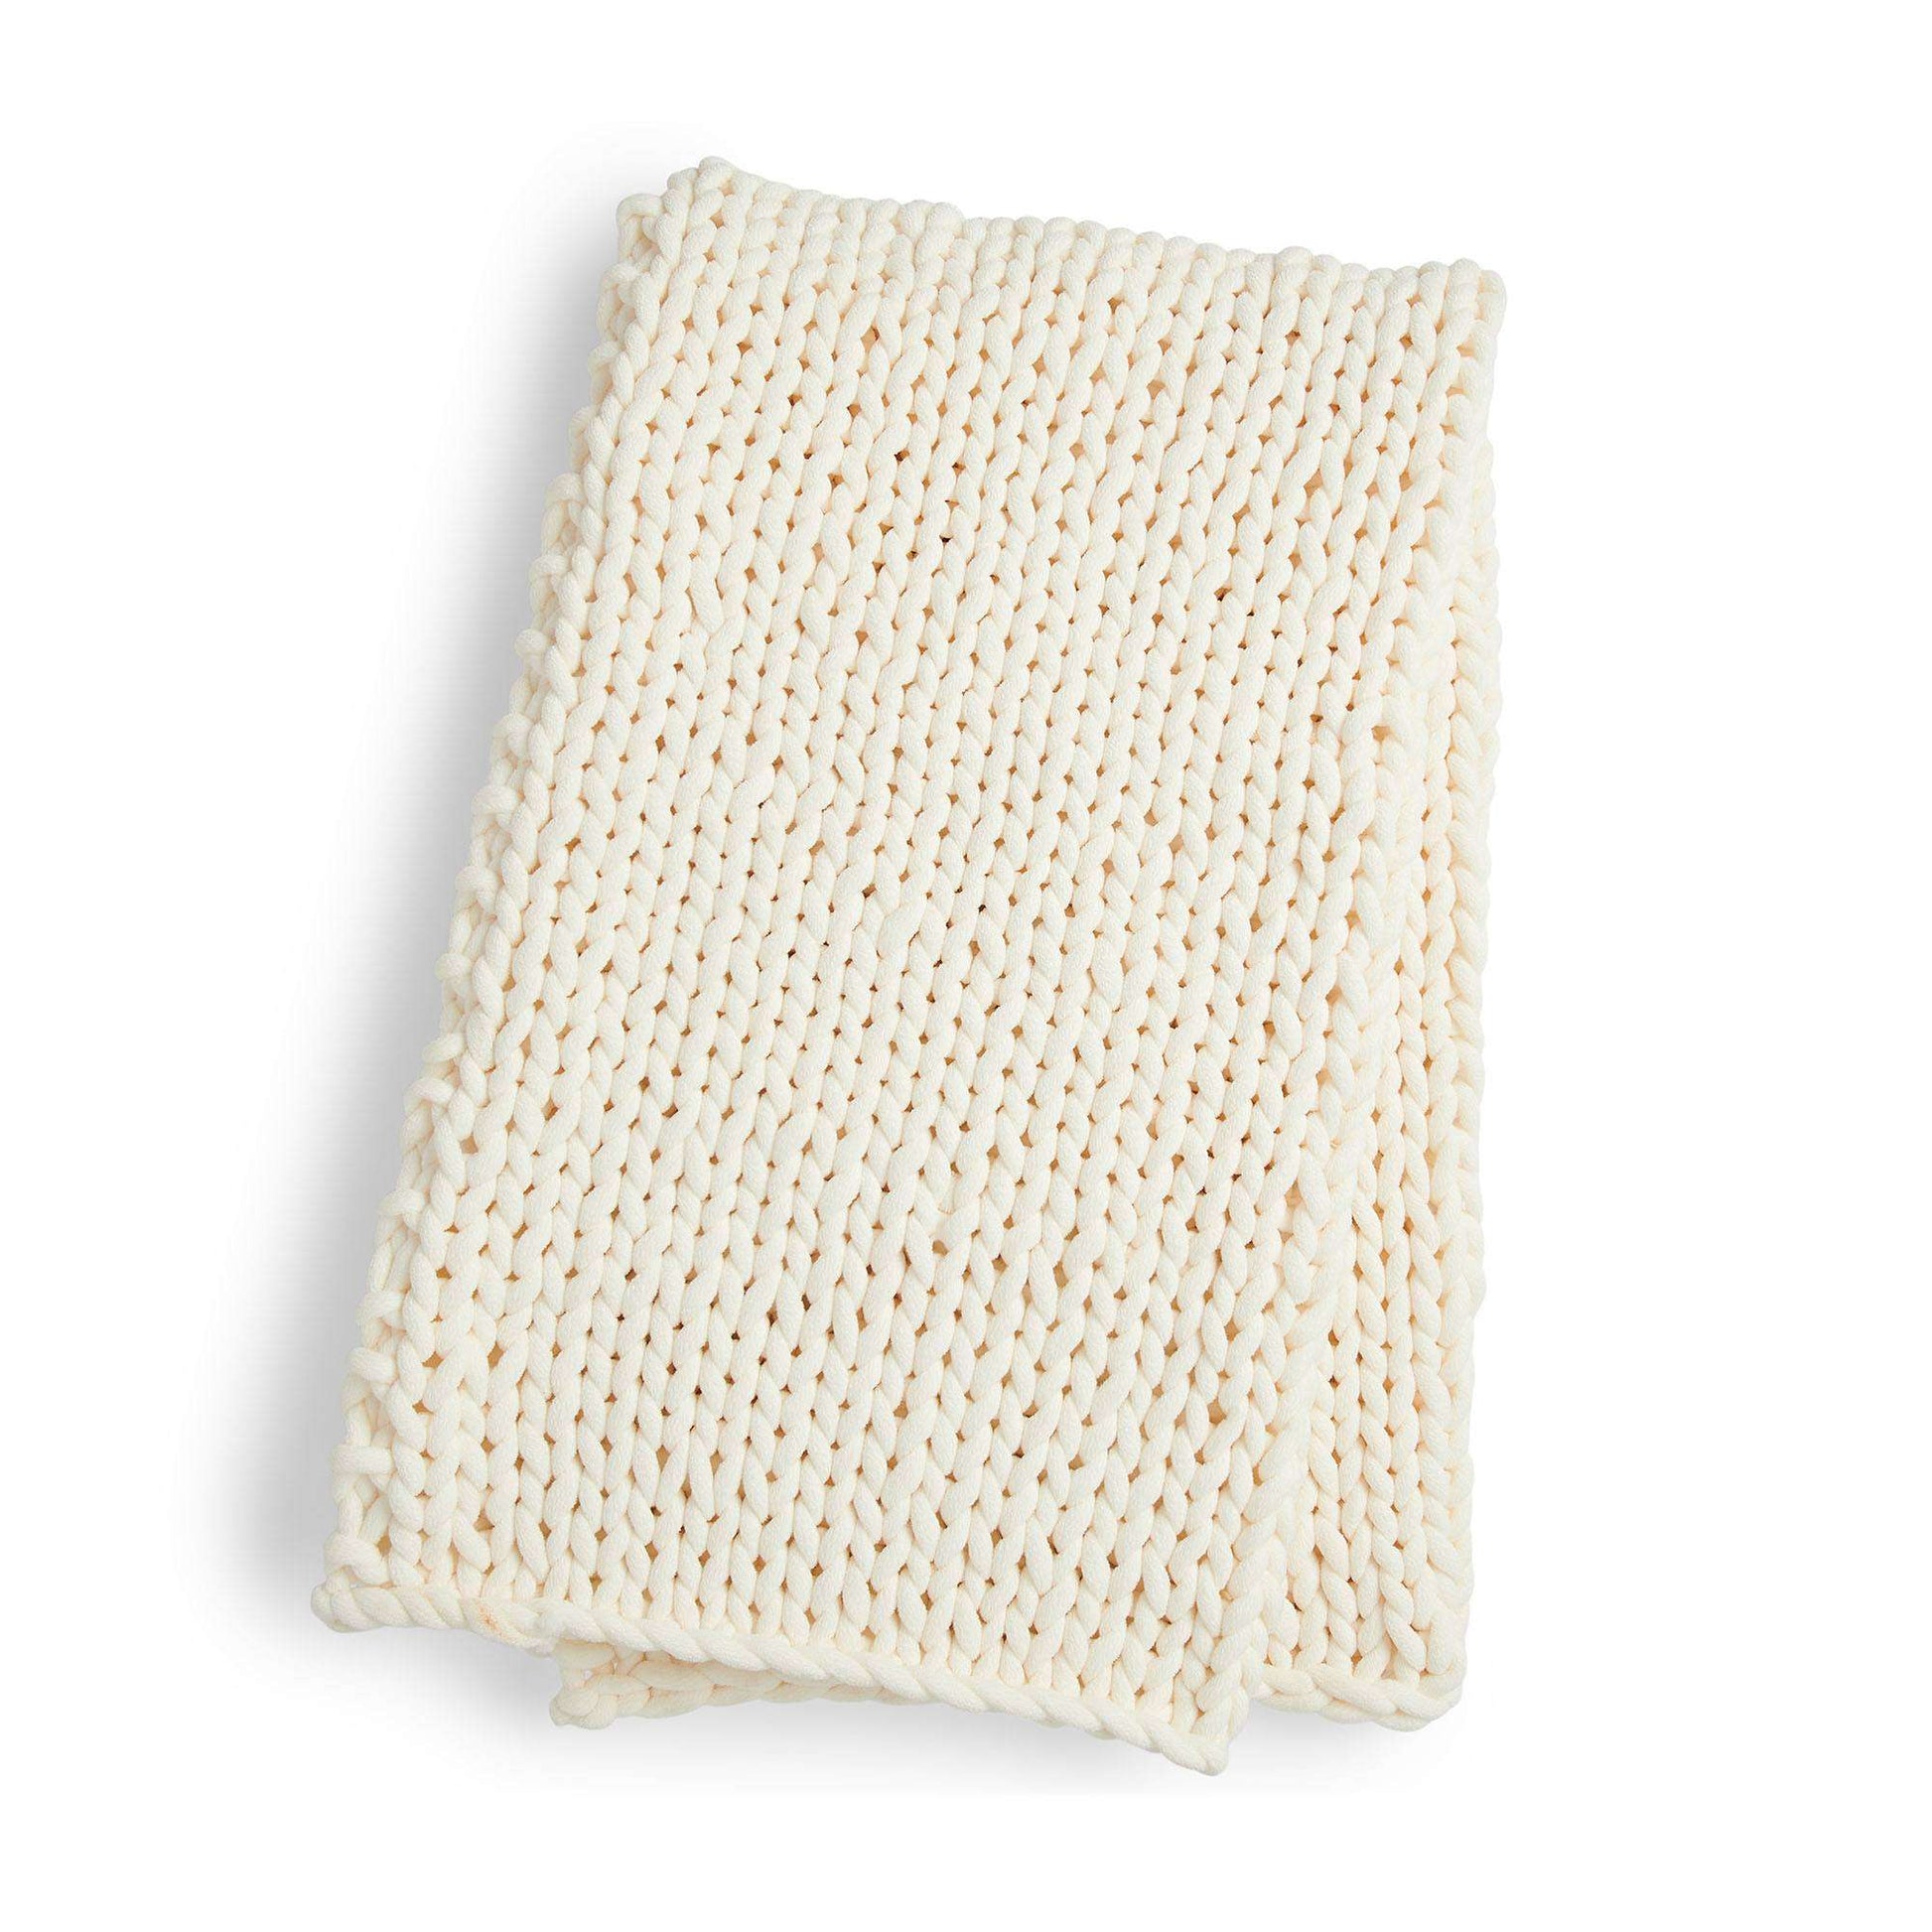 Bernat Super Stocking Stitch Knit Blanket, Yarnspirations